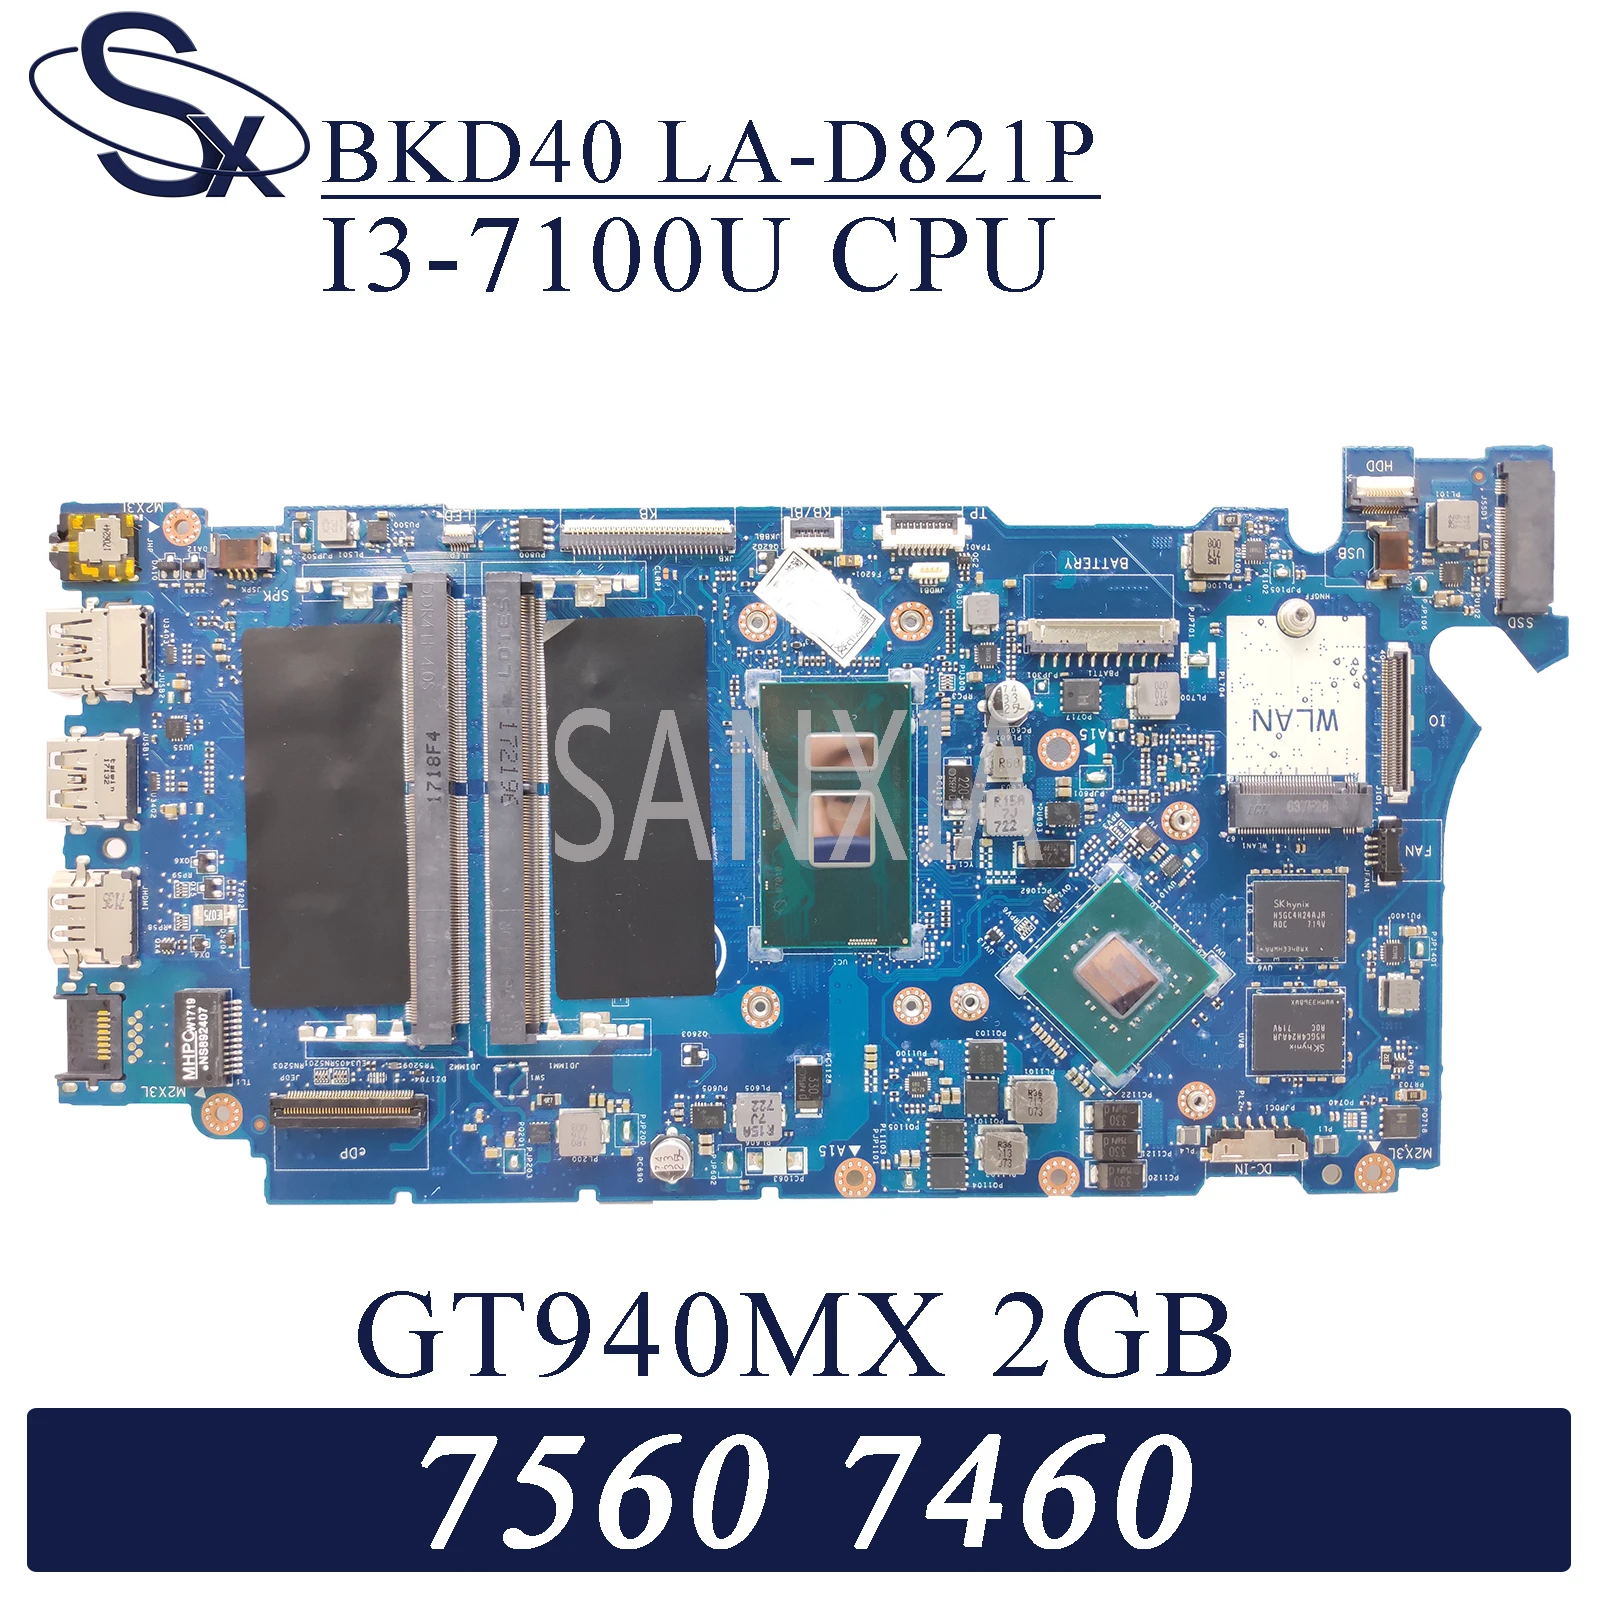 

KEFU BKD40 LA-D821P Laptop motherboard for Dell Inspiron 15-7560 14-7460 original mainboard I3-7100U GT940MX